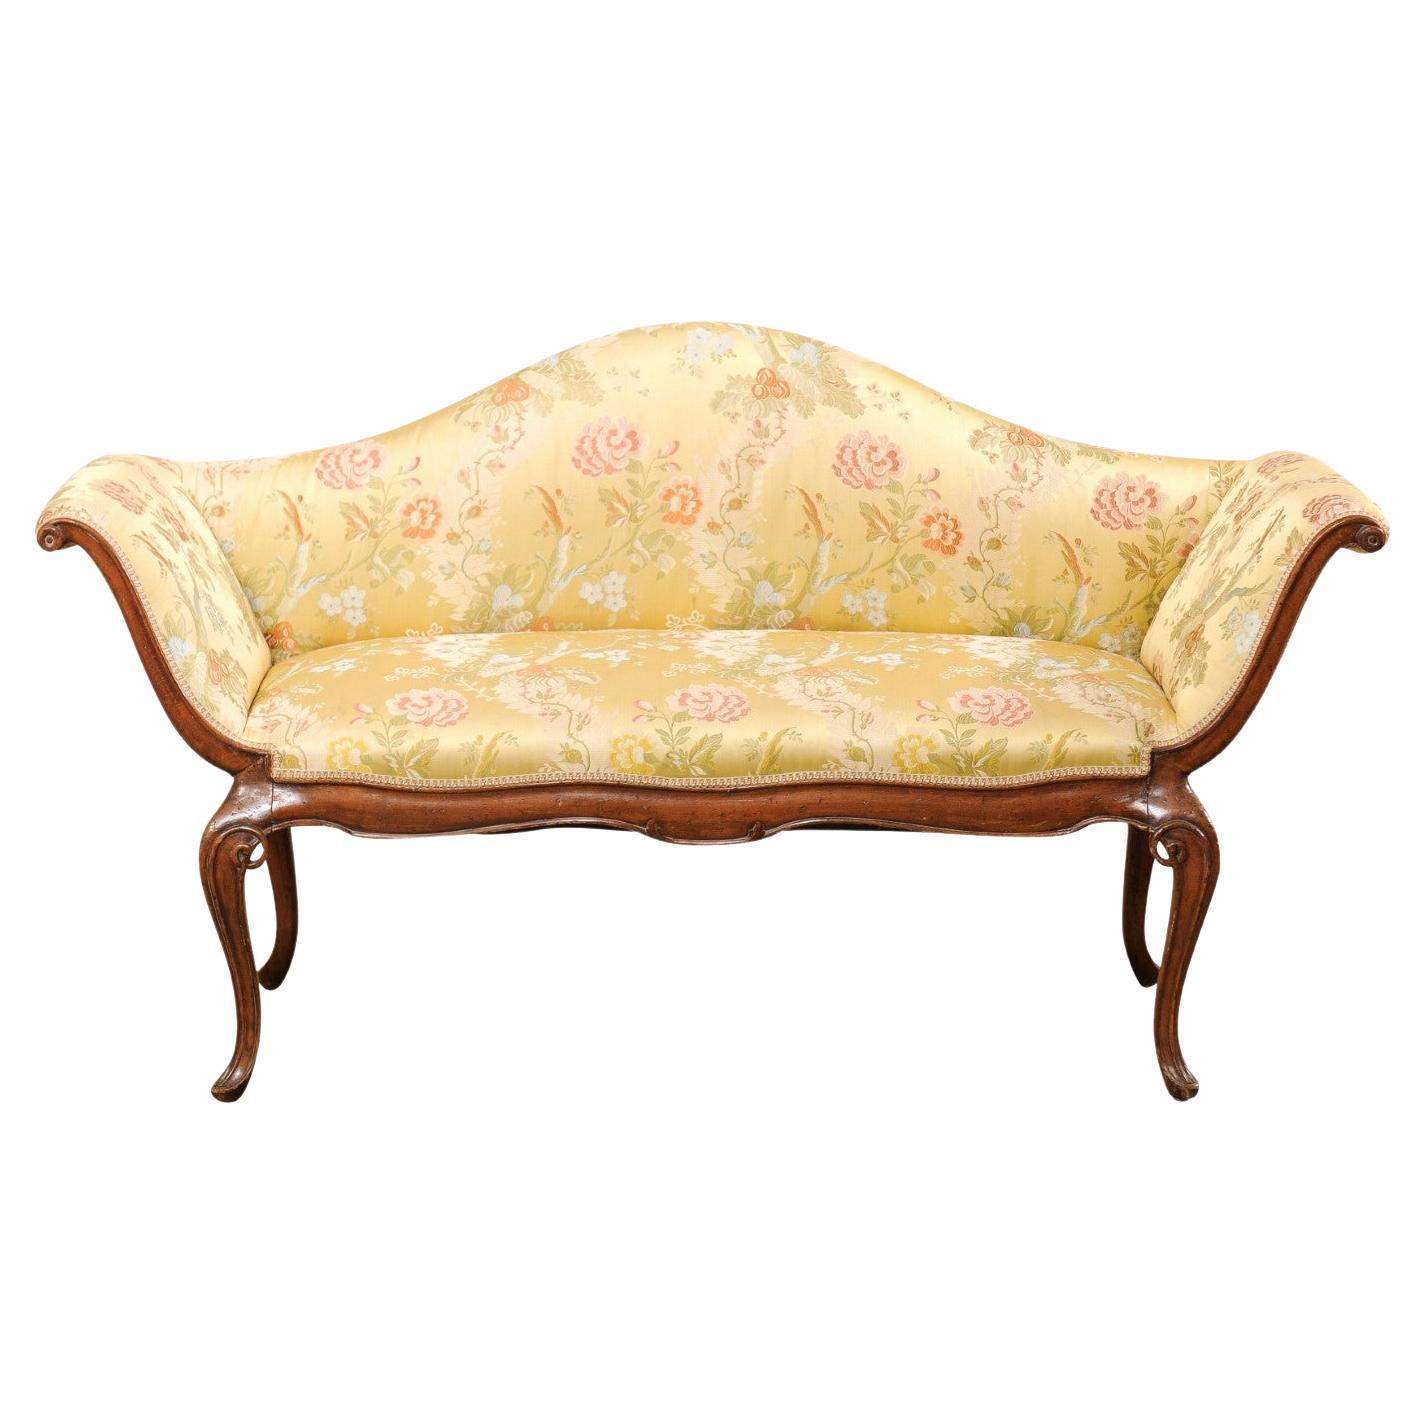 Elegant Italian Venetian Style Sofa, Early 19th C